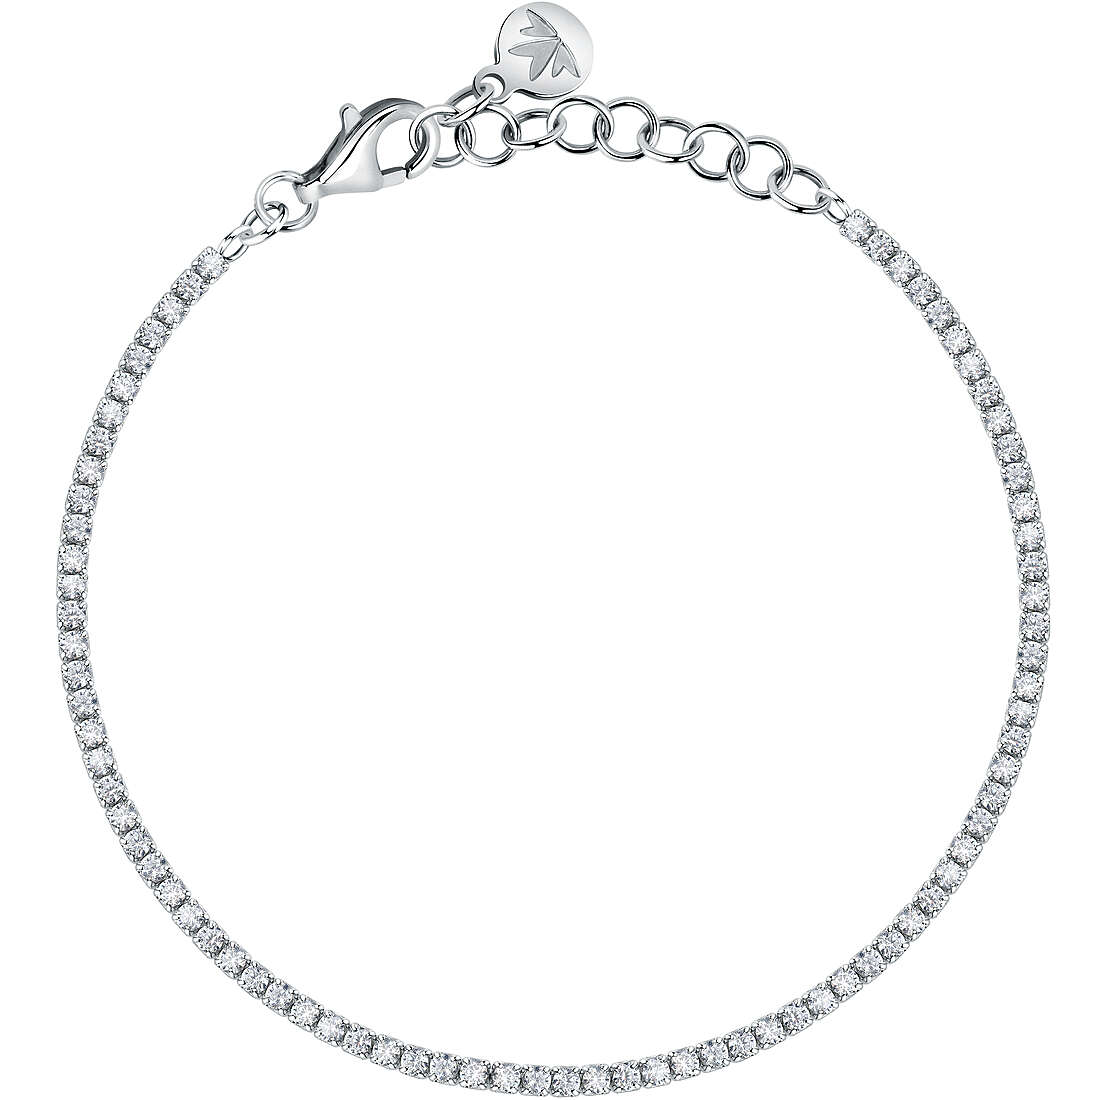 bracelet woman jewellery Morellato Tesori SAIW132